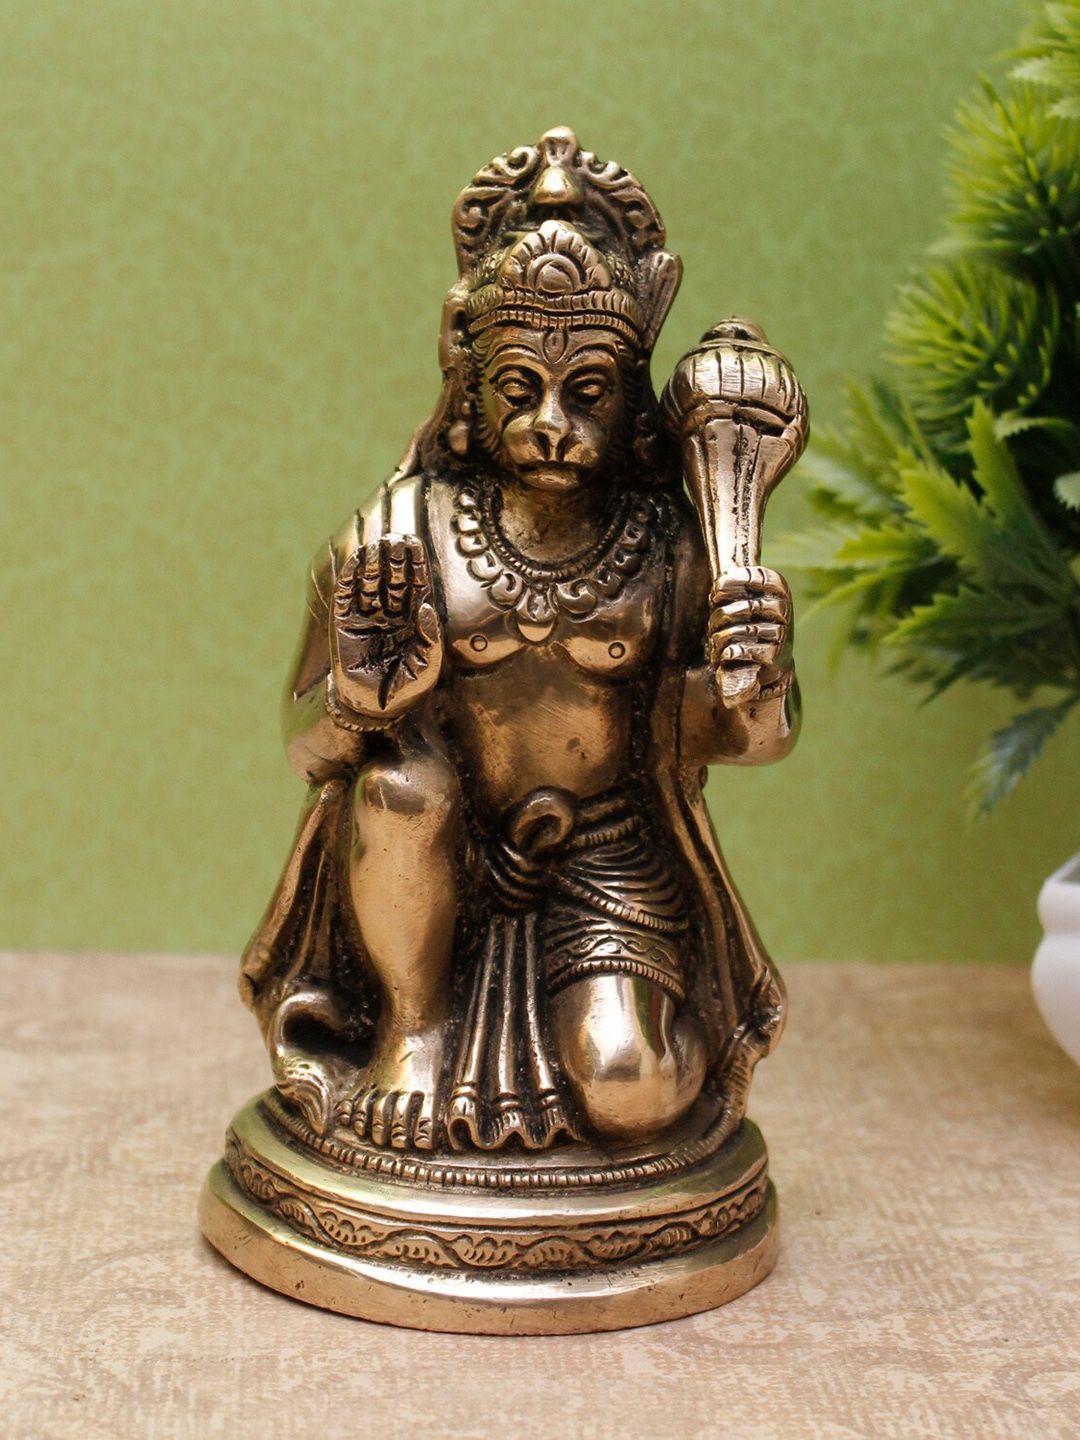 StatueStudio Gold-Toned Textured Lord Hanuman Showpiece Price in India